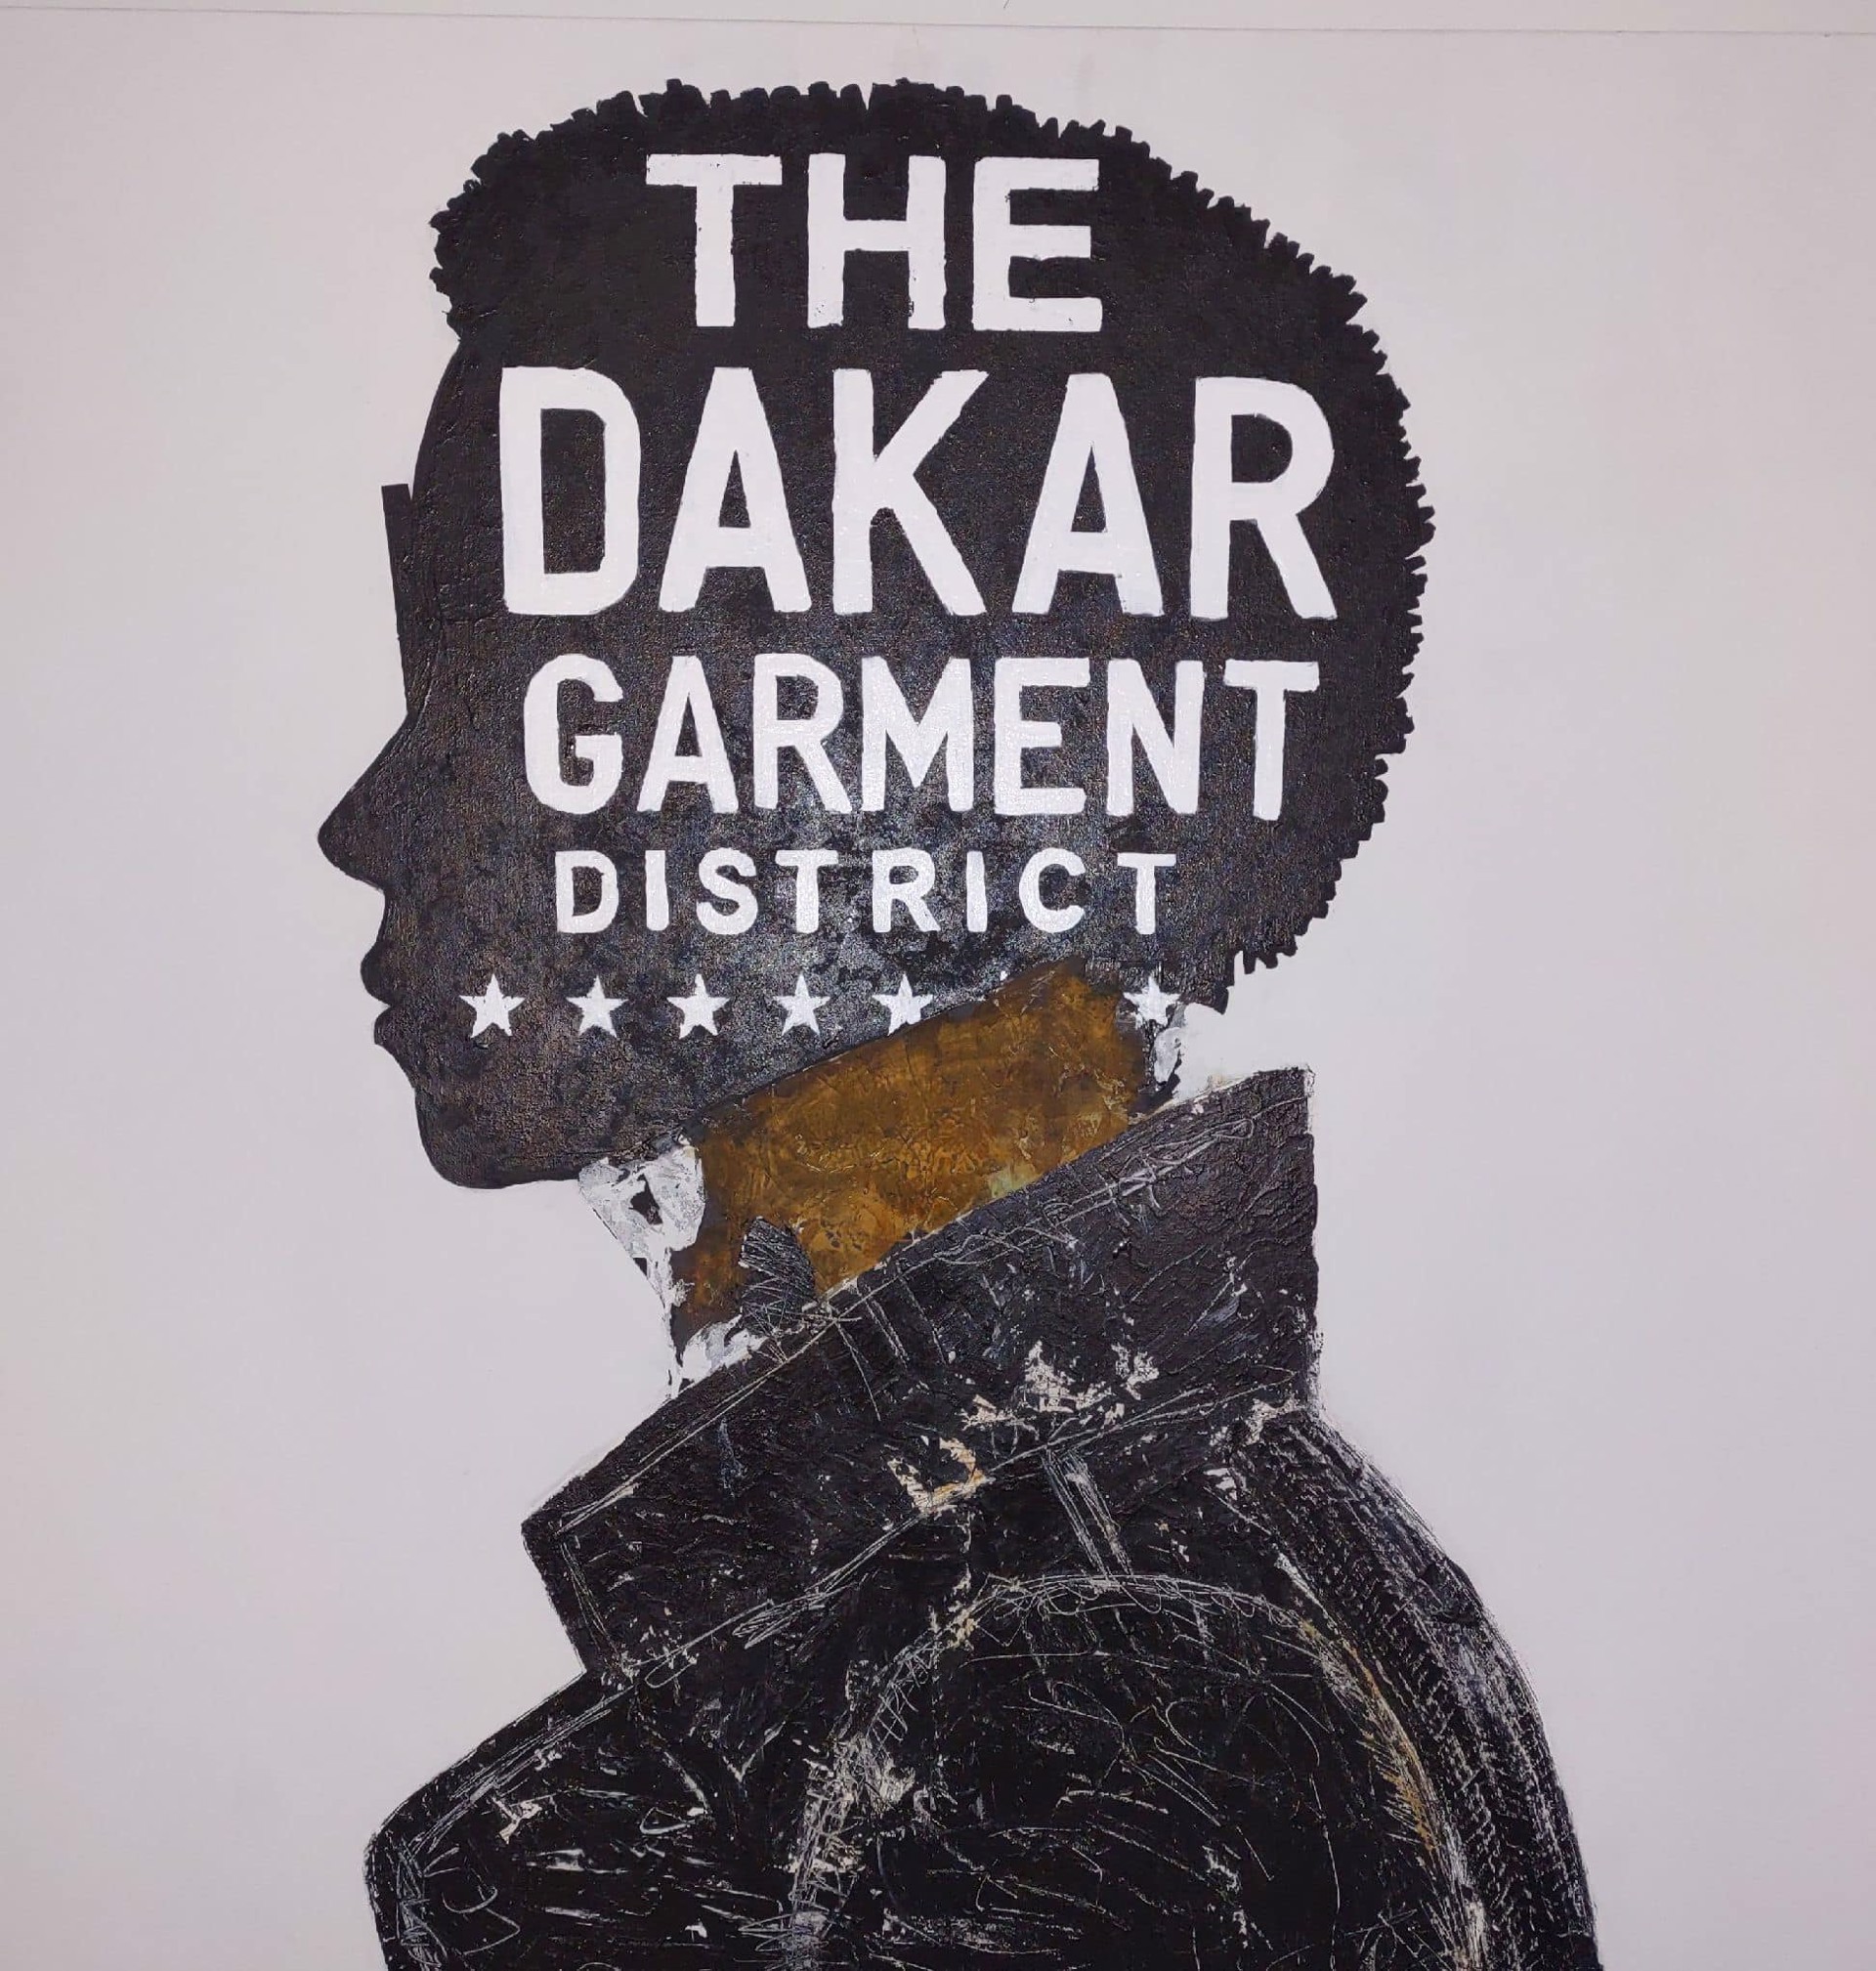 Dakar Garment District by Jo Baskerville